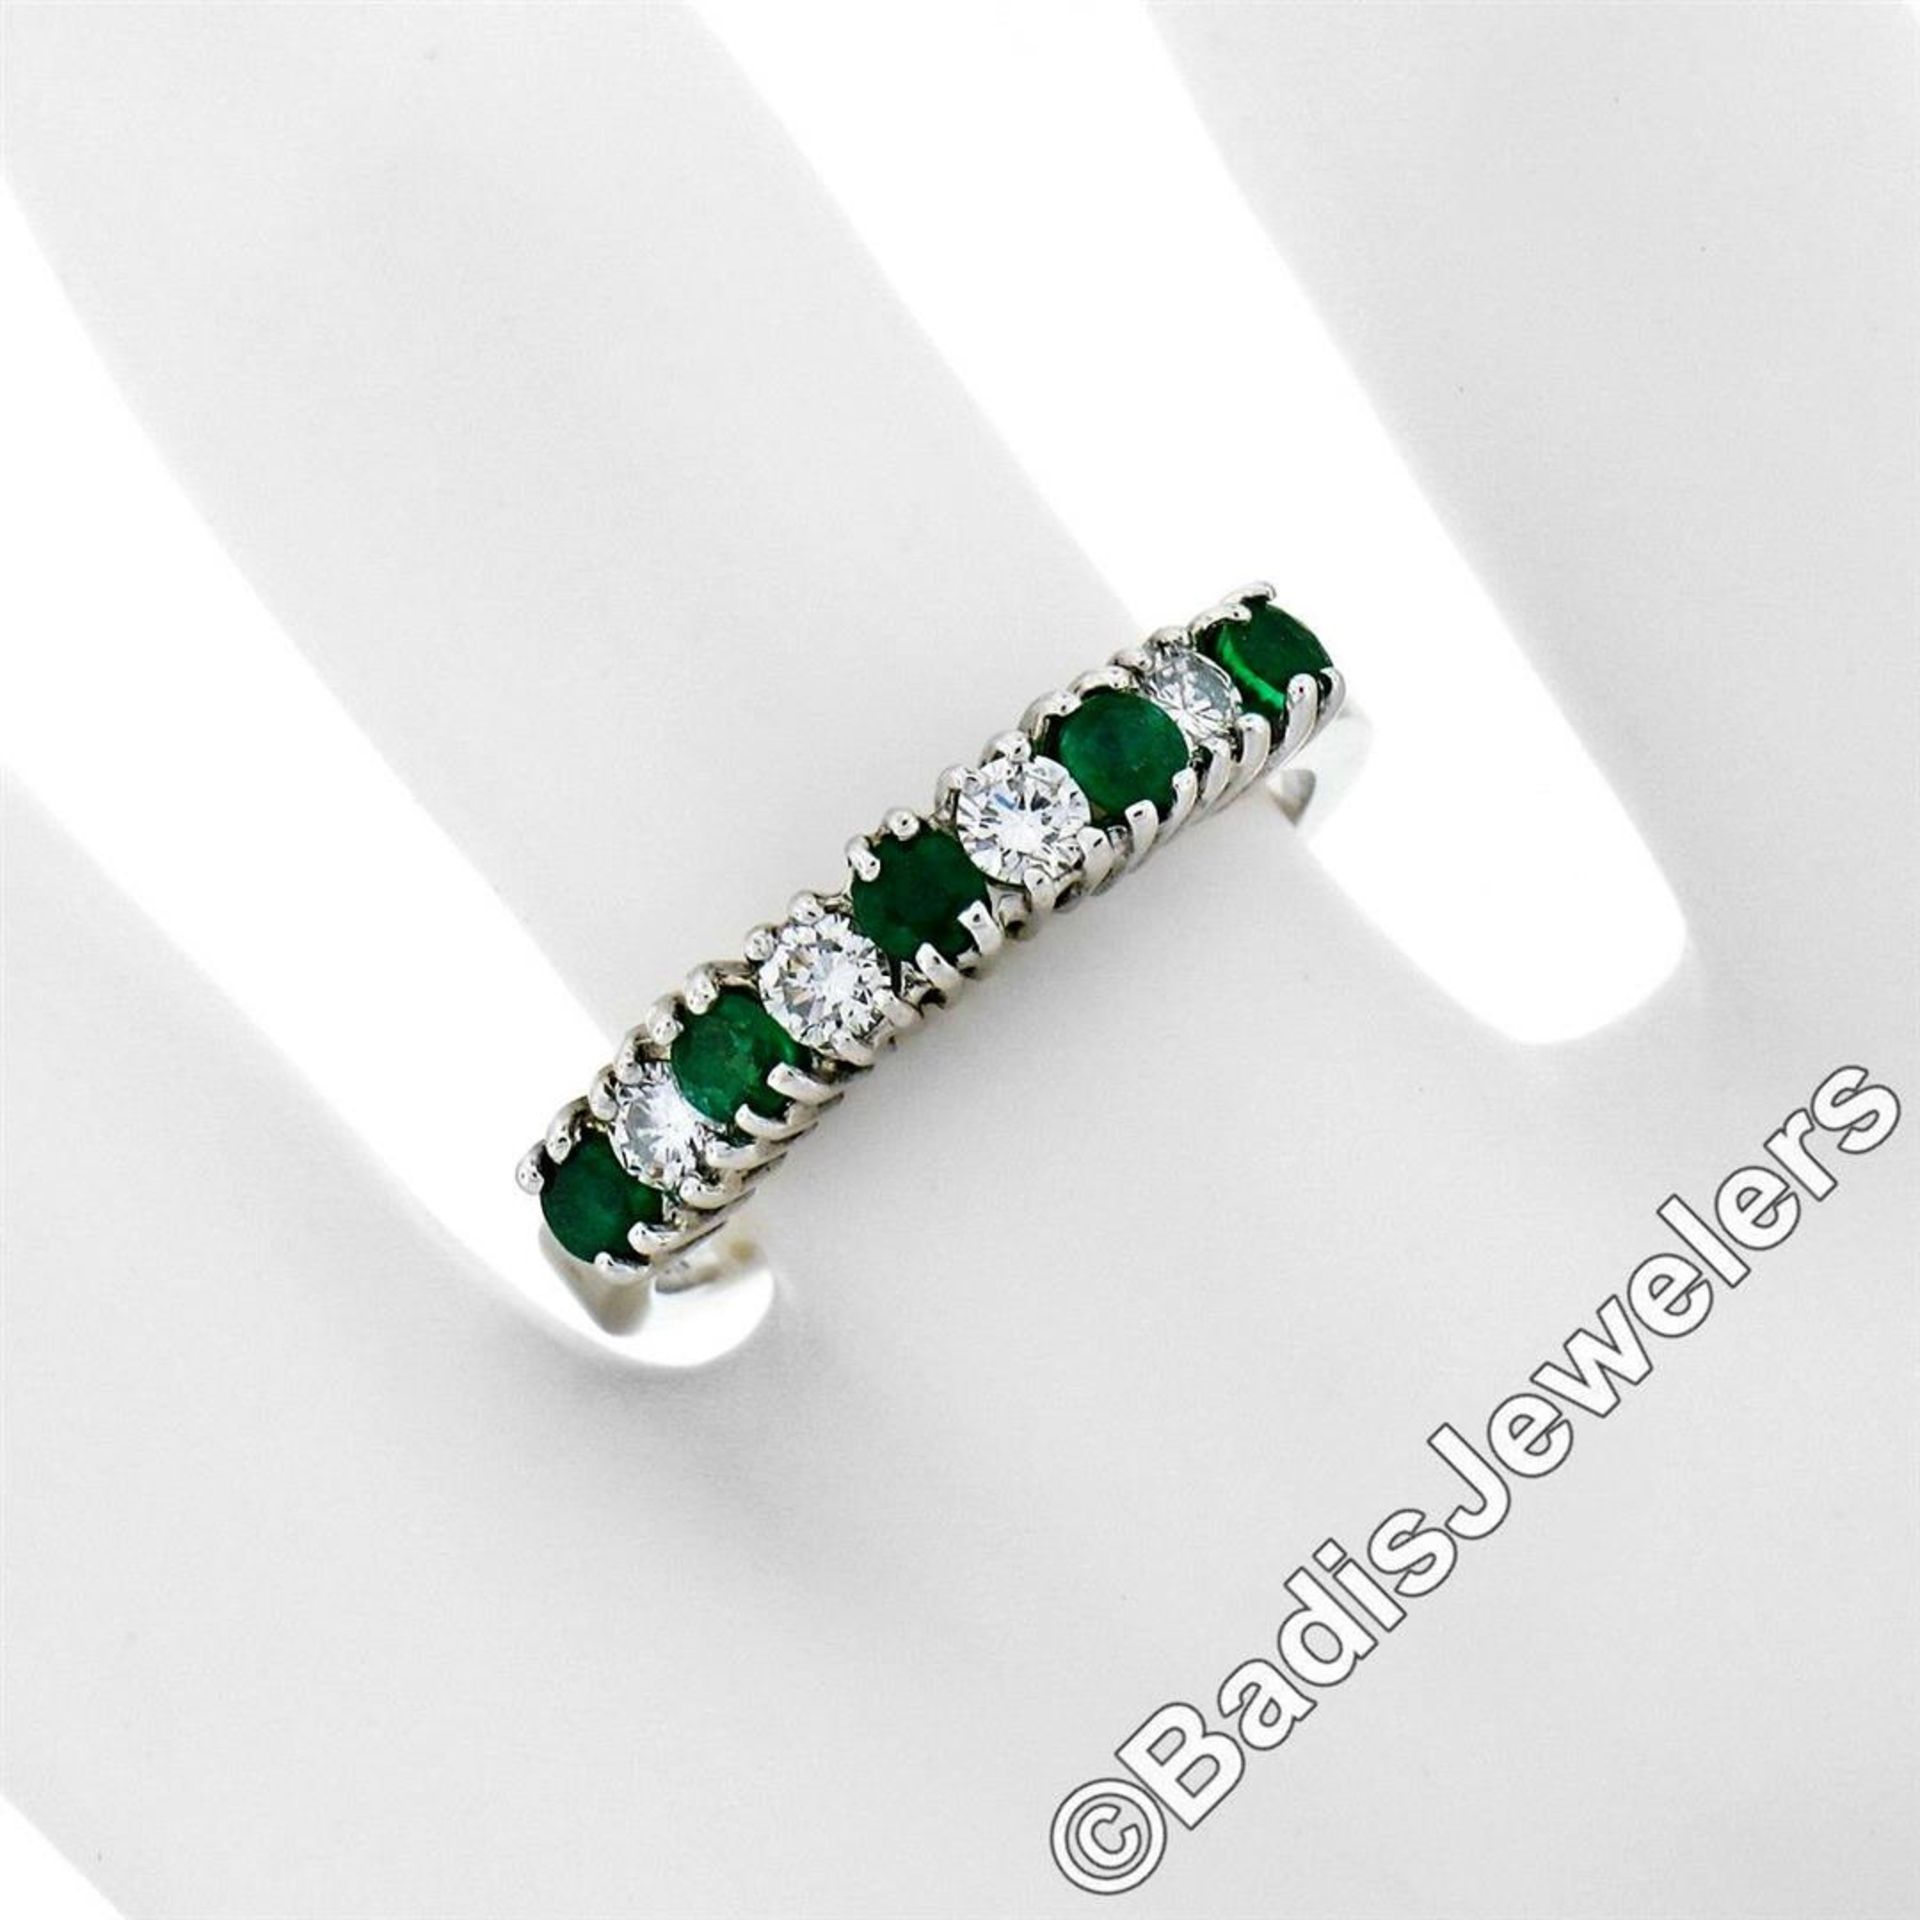 18kt White Gold 1.36 ctw Alternating Round Diamond & Emerald Wedding Band Ring - Image 3 of 9